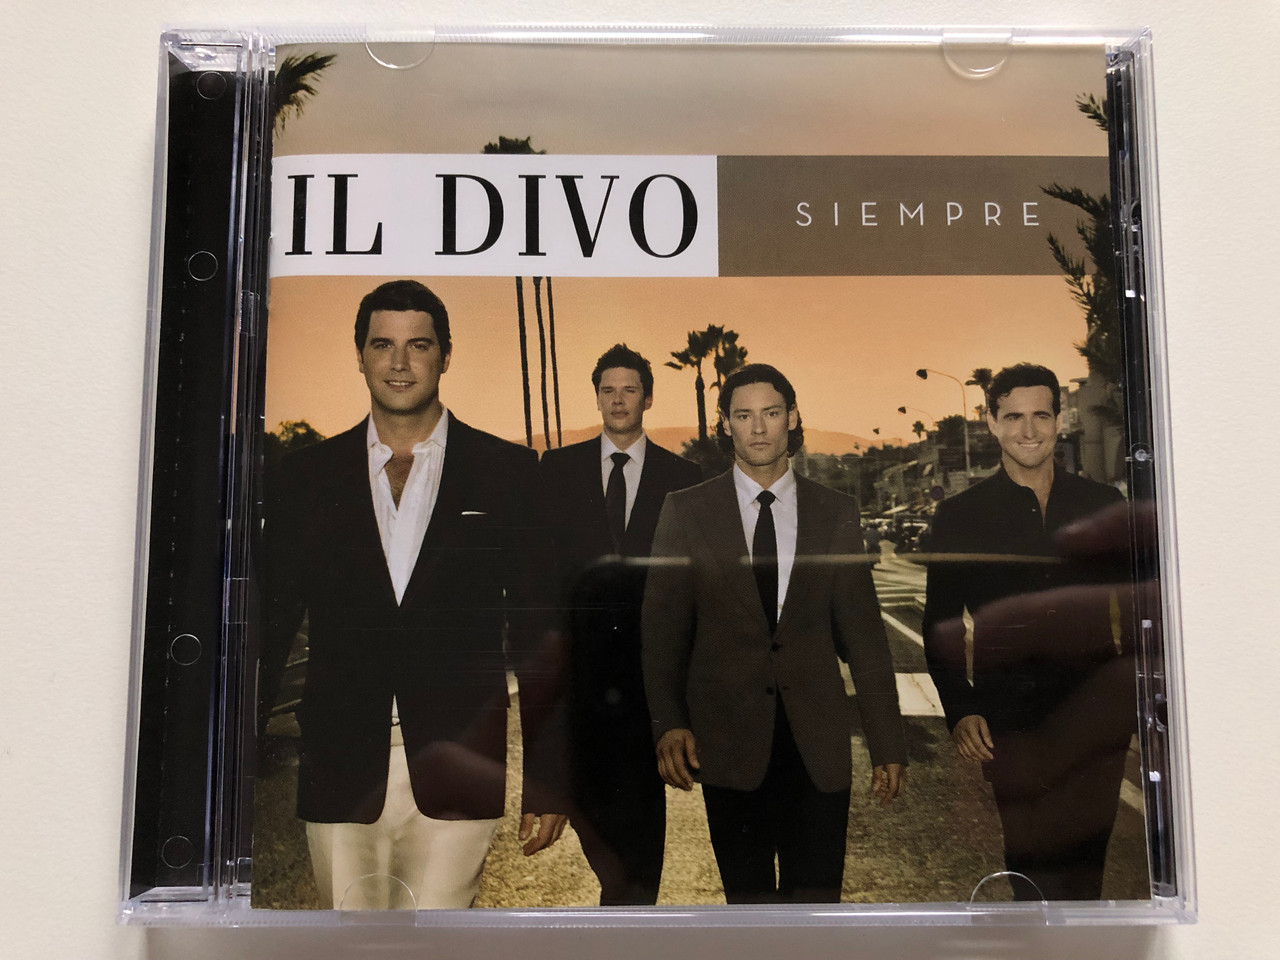 Il Divo – Siempre / Syco Music Audio CD 2006 / 88697015522 -  bibleinmylanguage